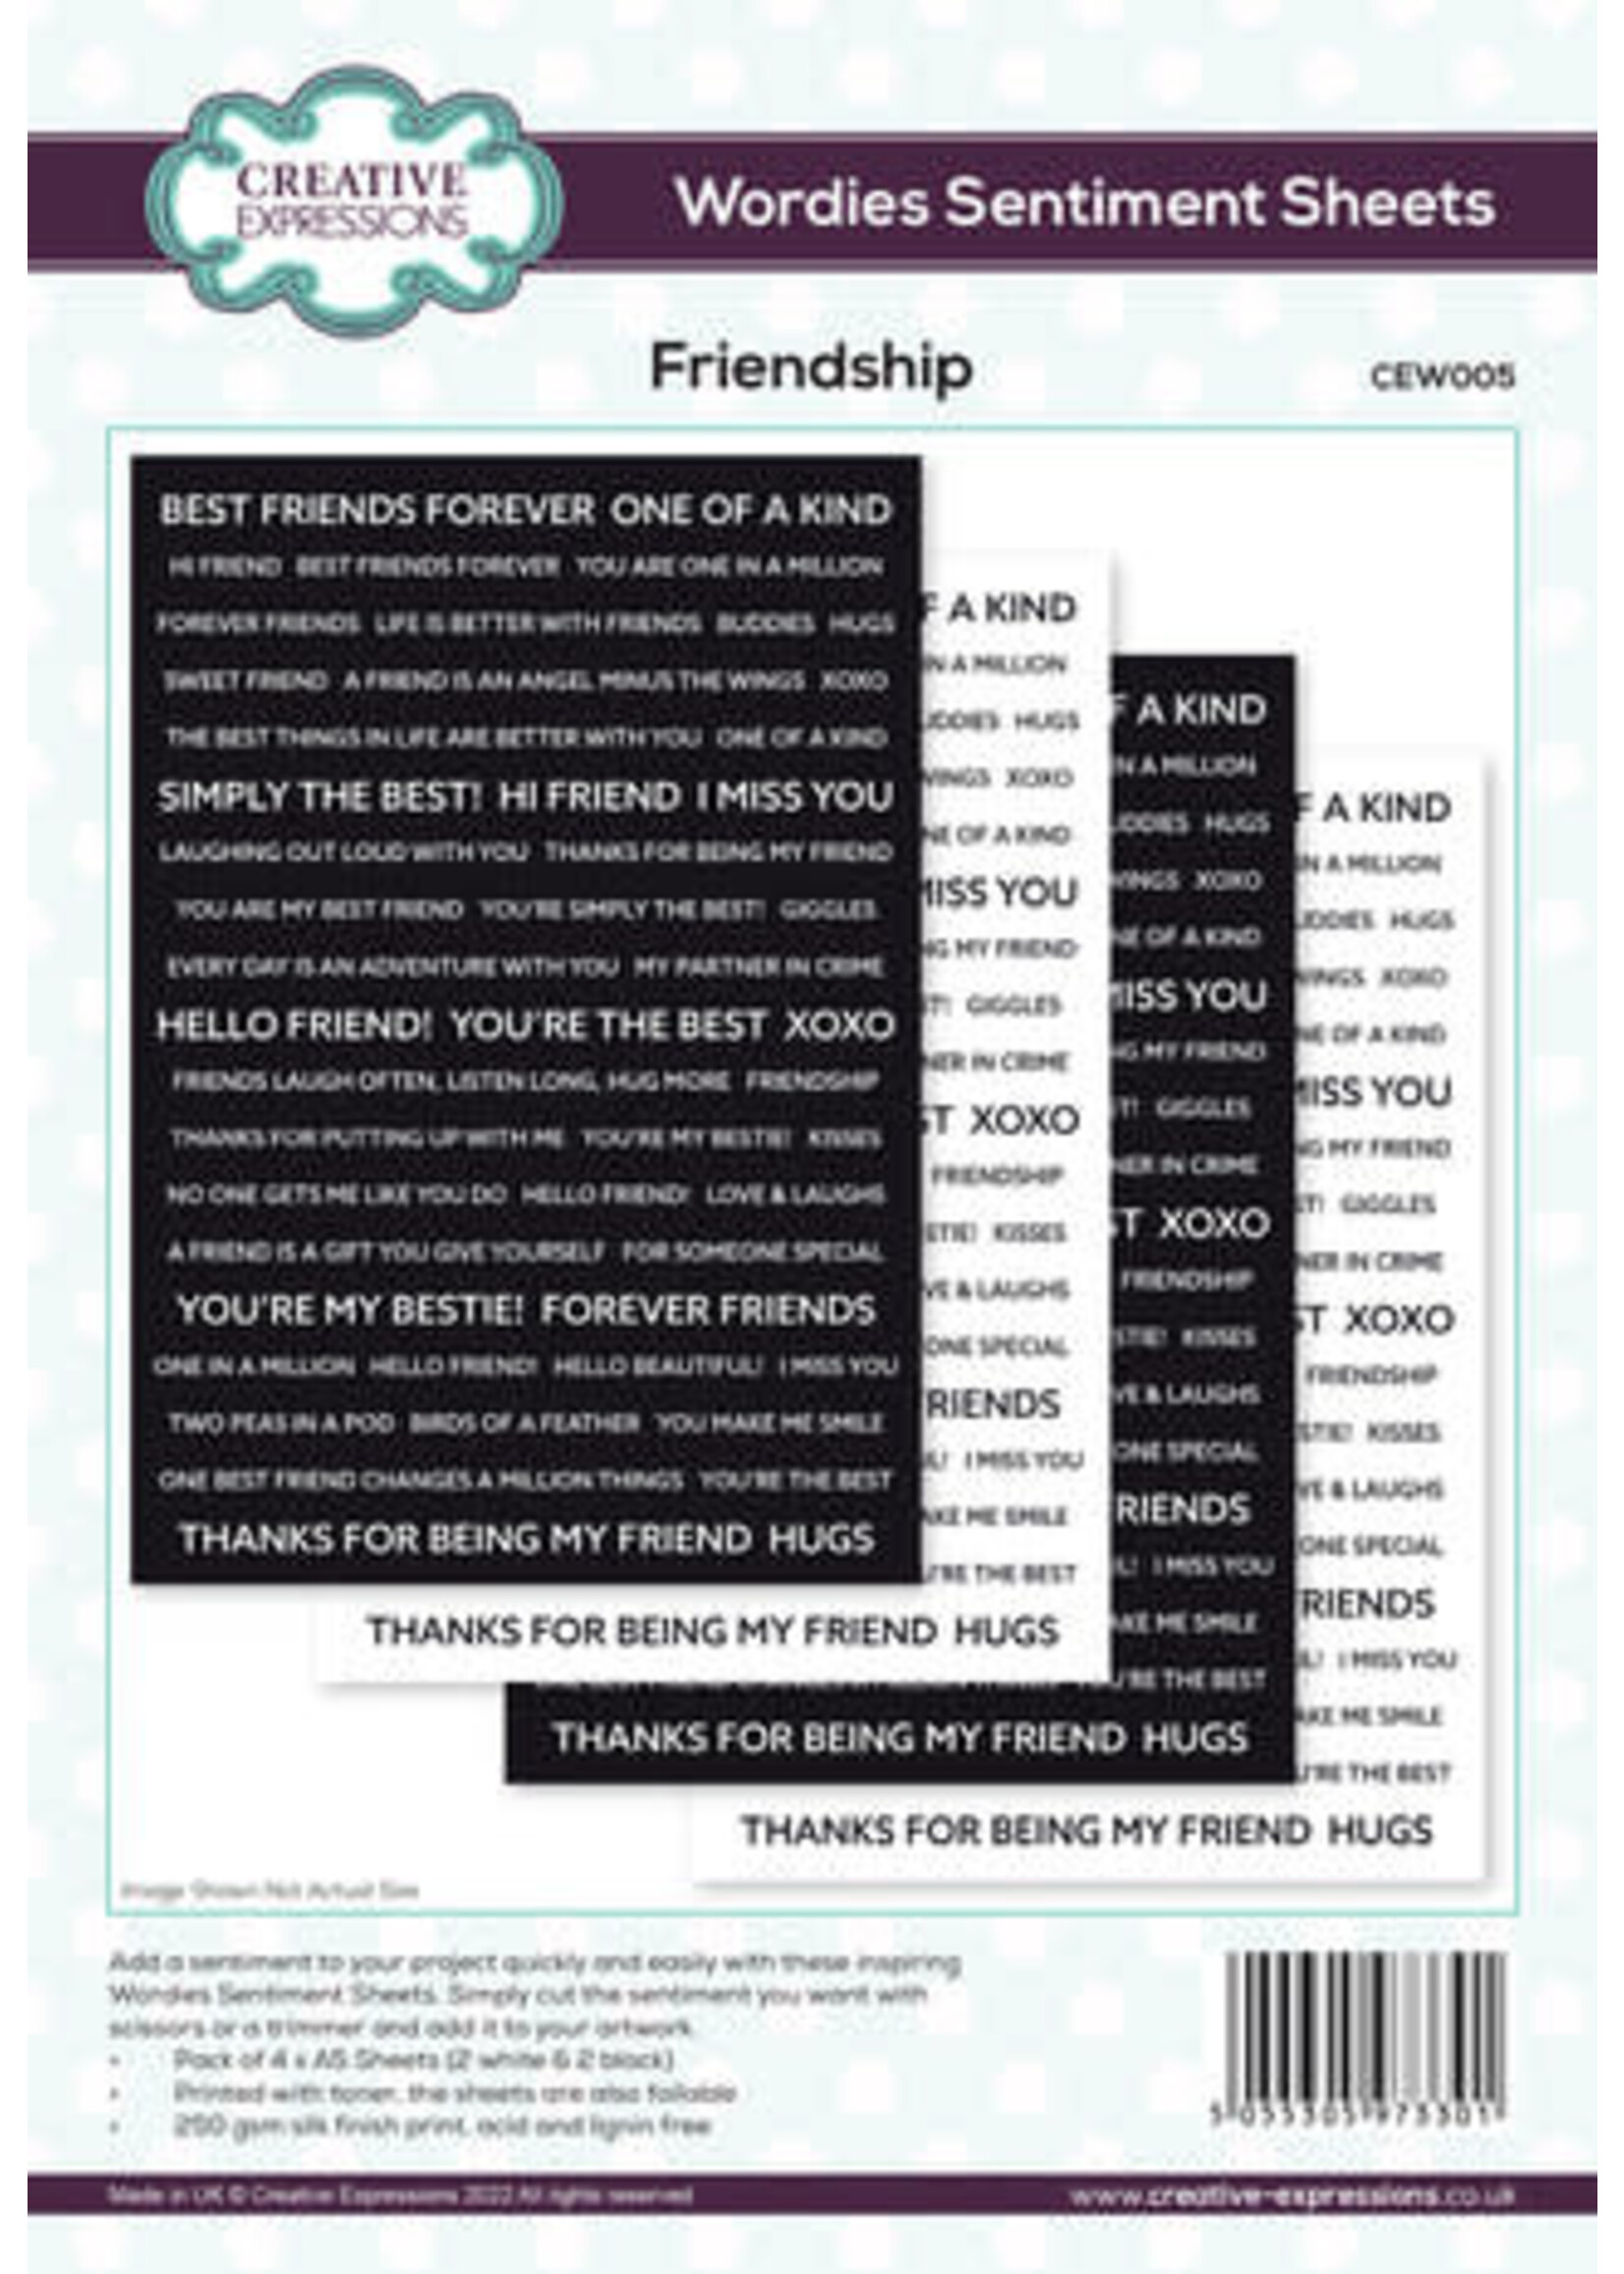 creative expressions Wordies Sentiment Sheets 6x8 Inch Friendship (4pcs) (CEW005)